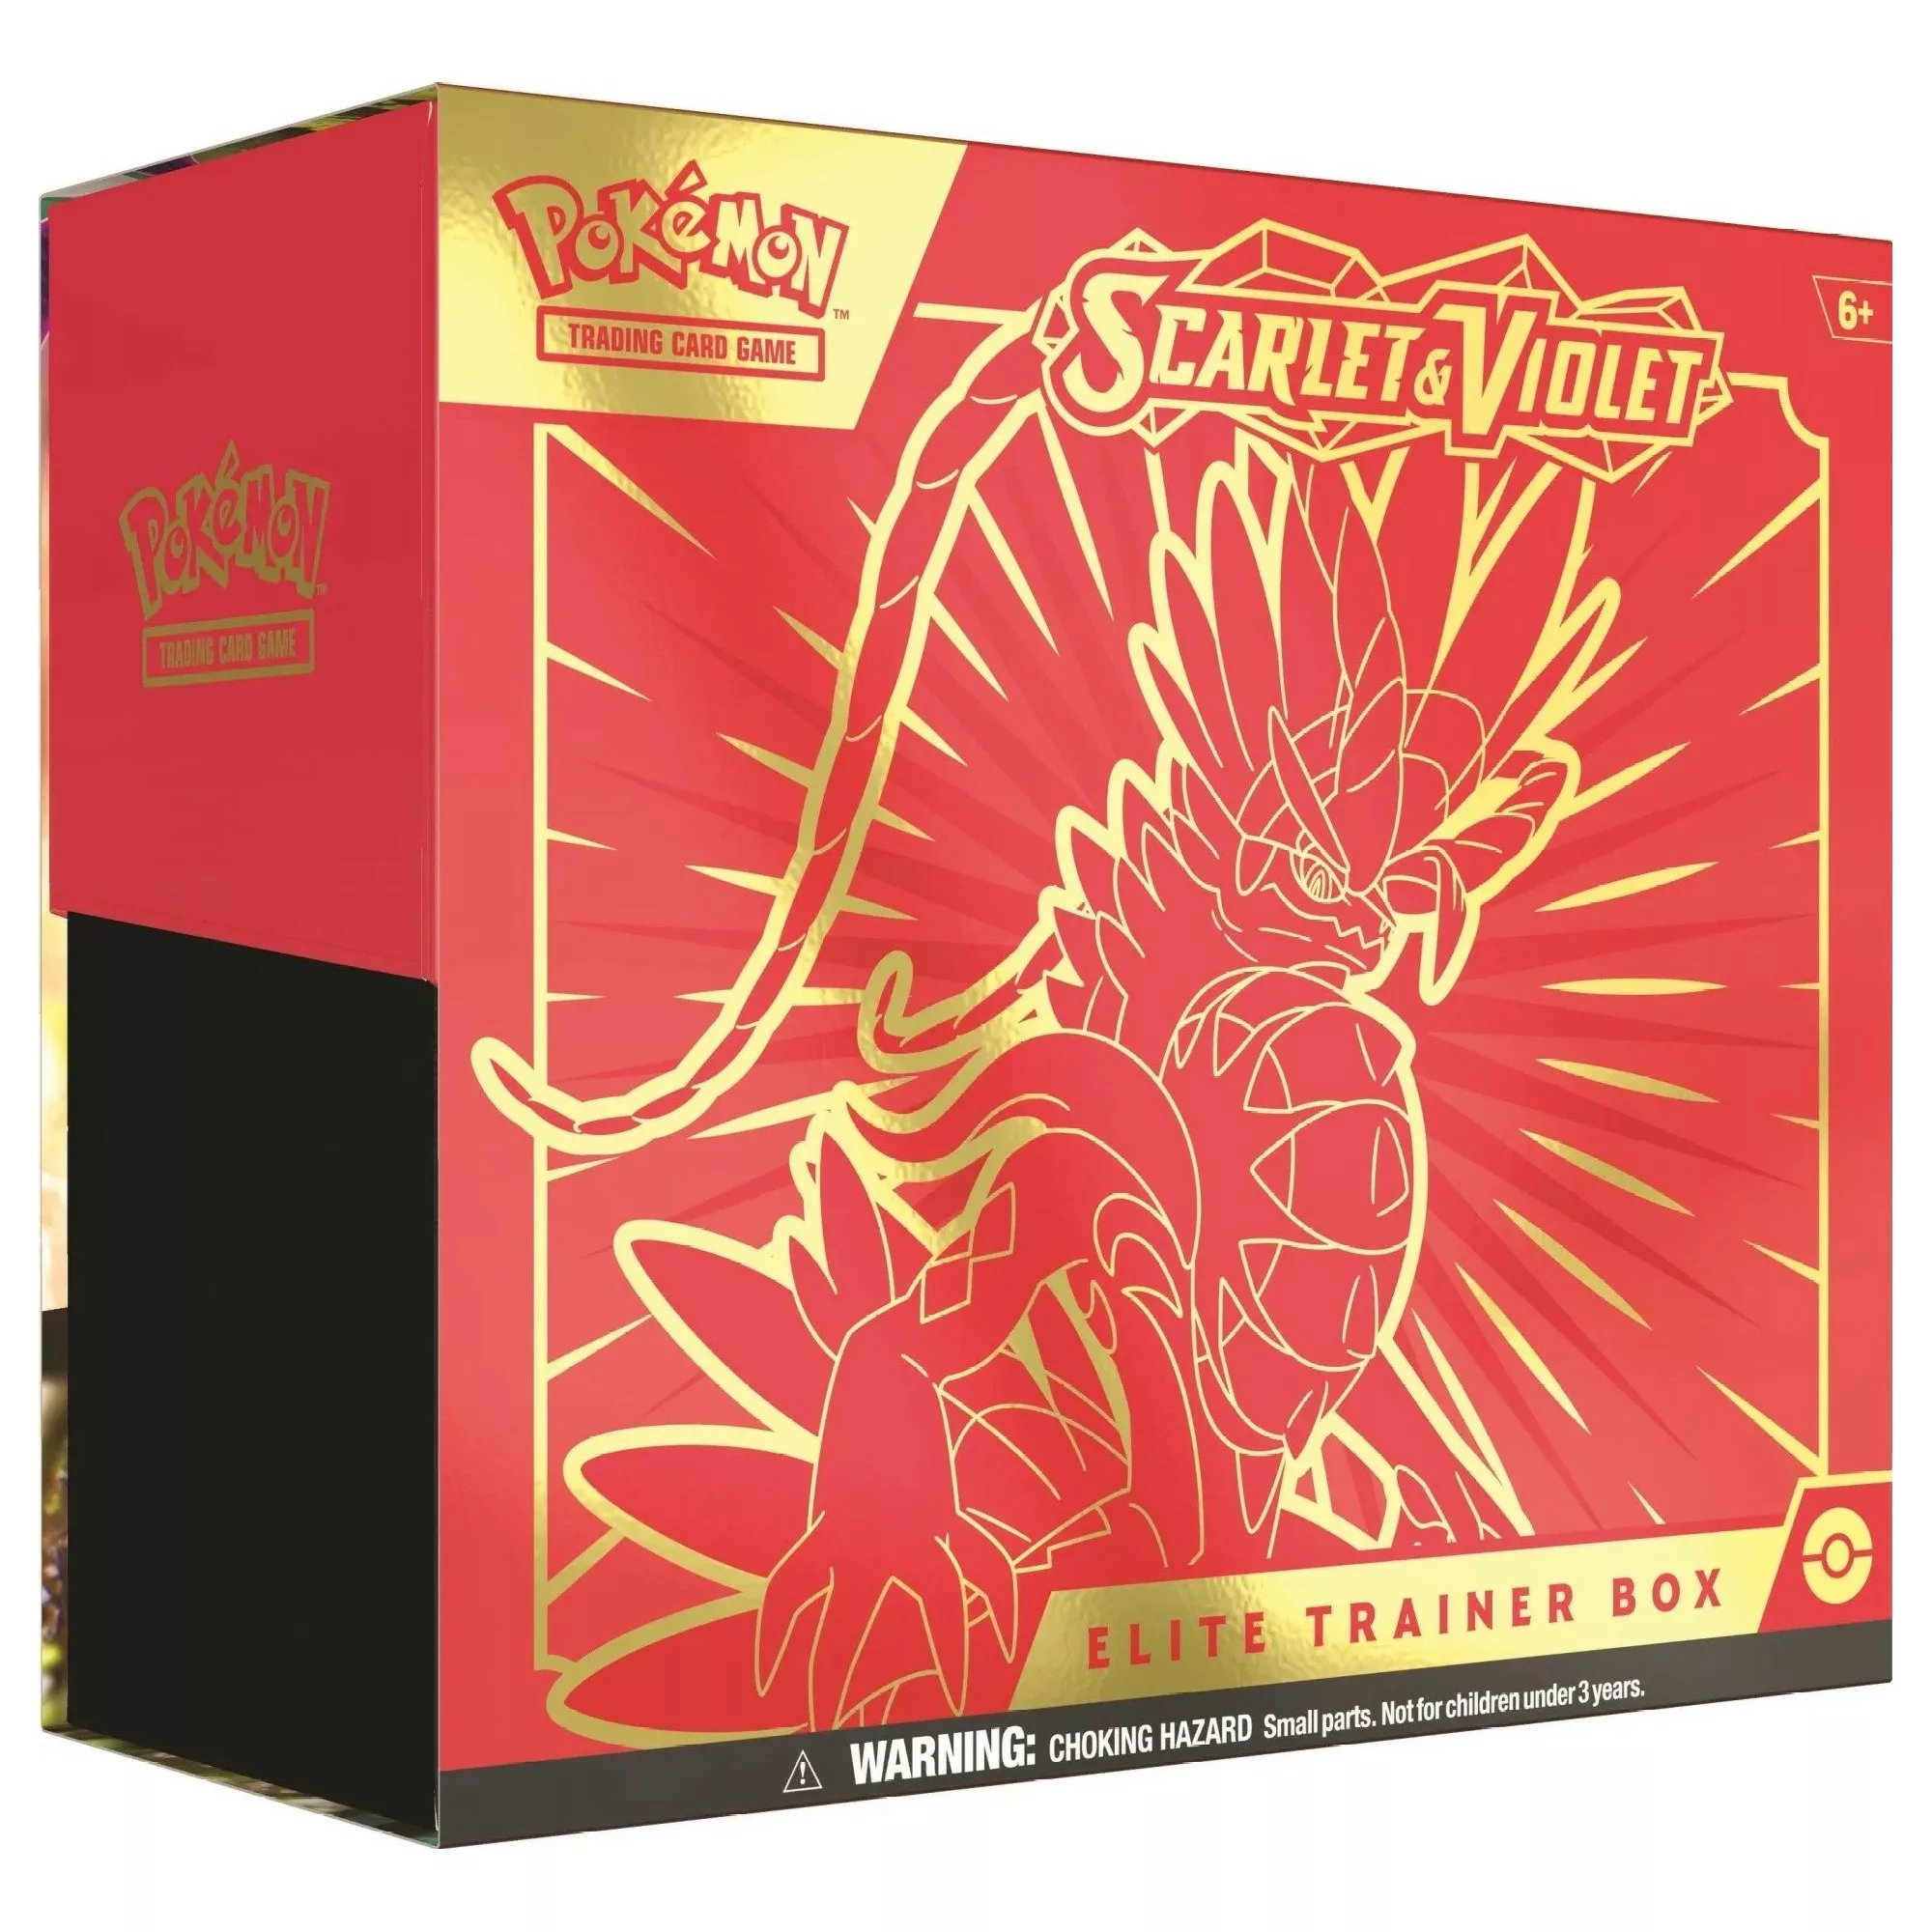 Temporal Forces - Elite Trainer Box (ETB) - Pokémon TCG: Scarlet & Vio